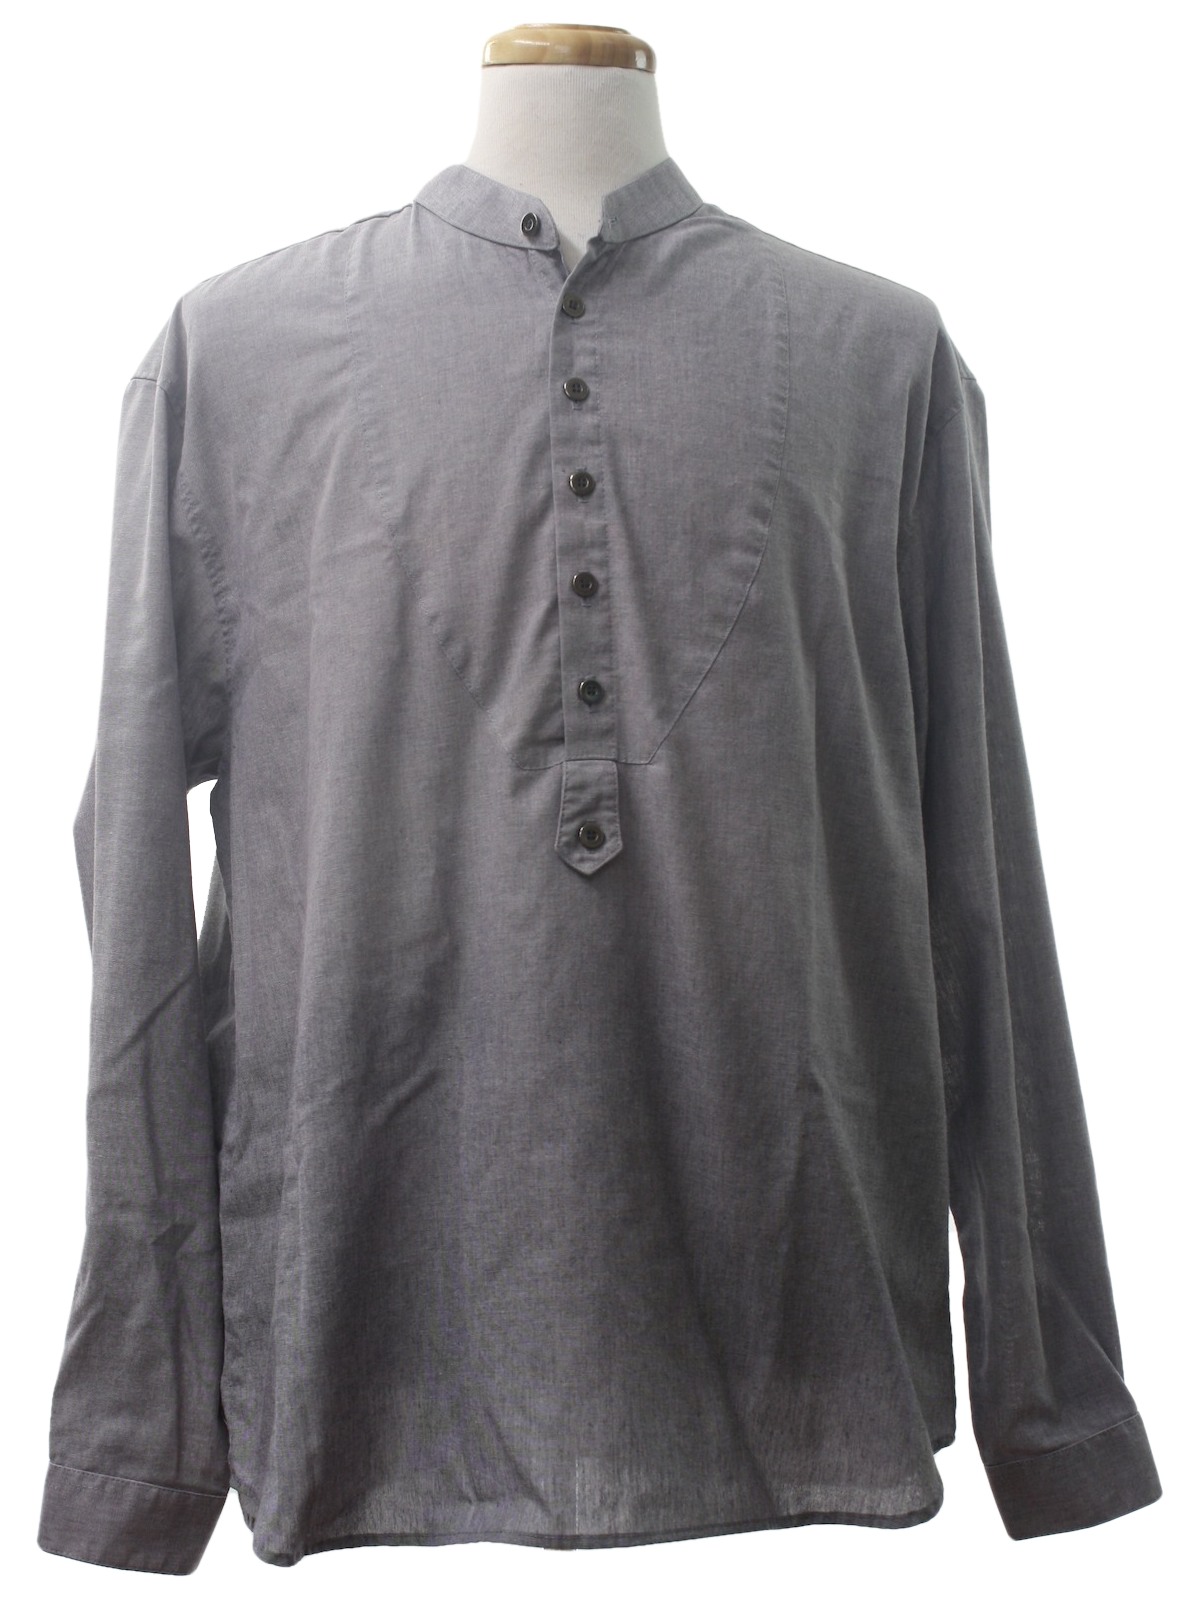 Western Shirt: 90s -Wah Maker- Mens grey background cotton longsleeve ...